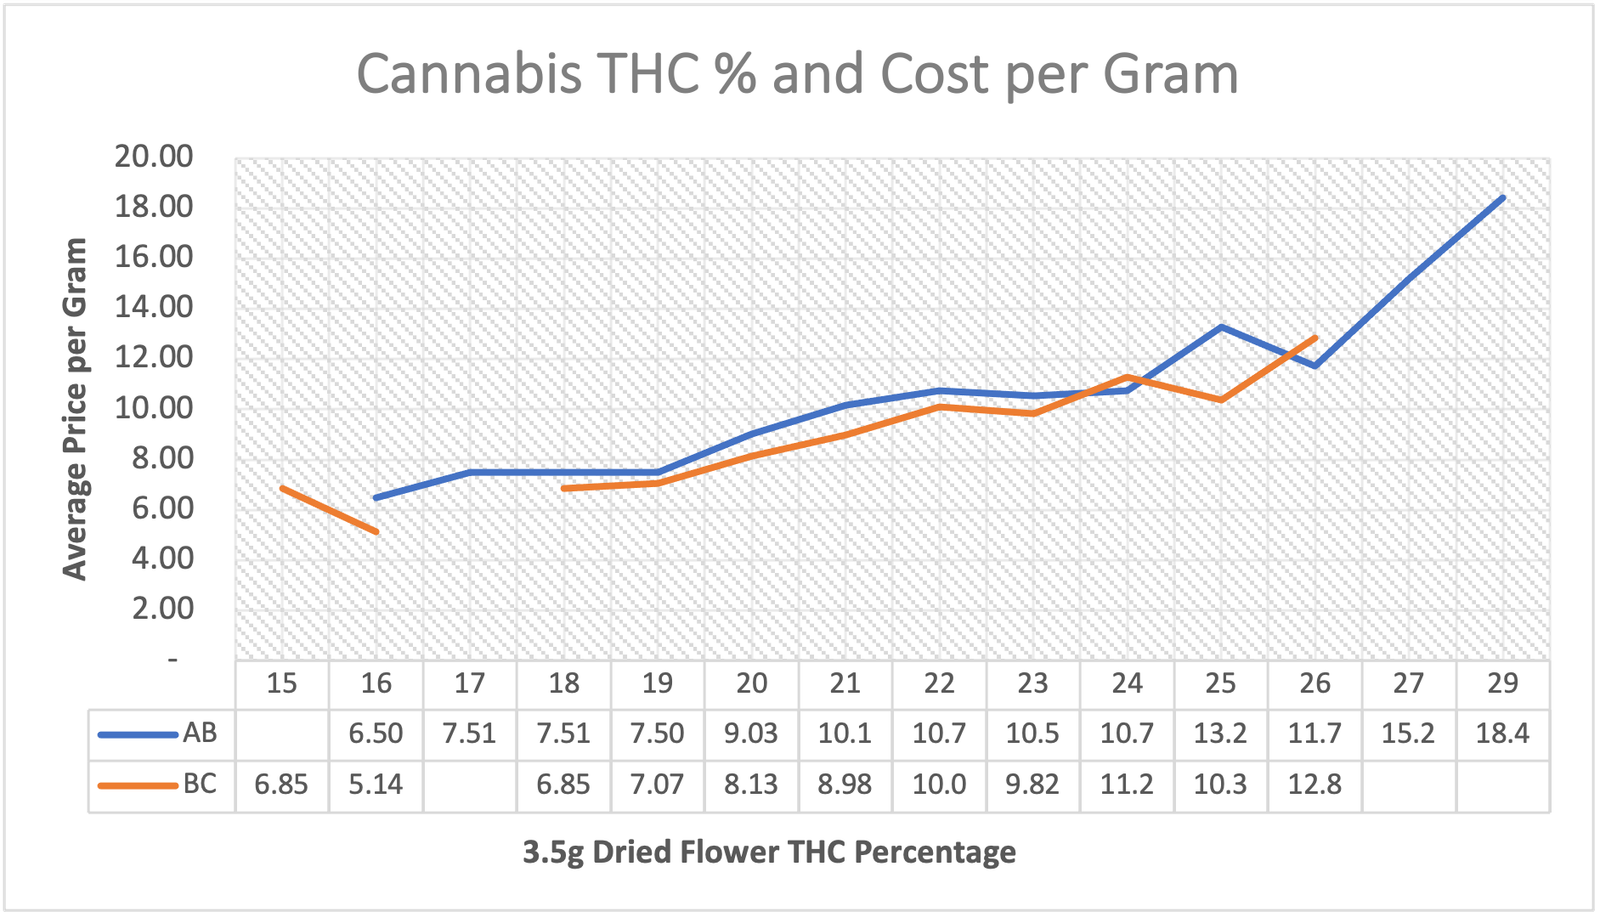 BC and AB THC% Cost per gram